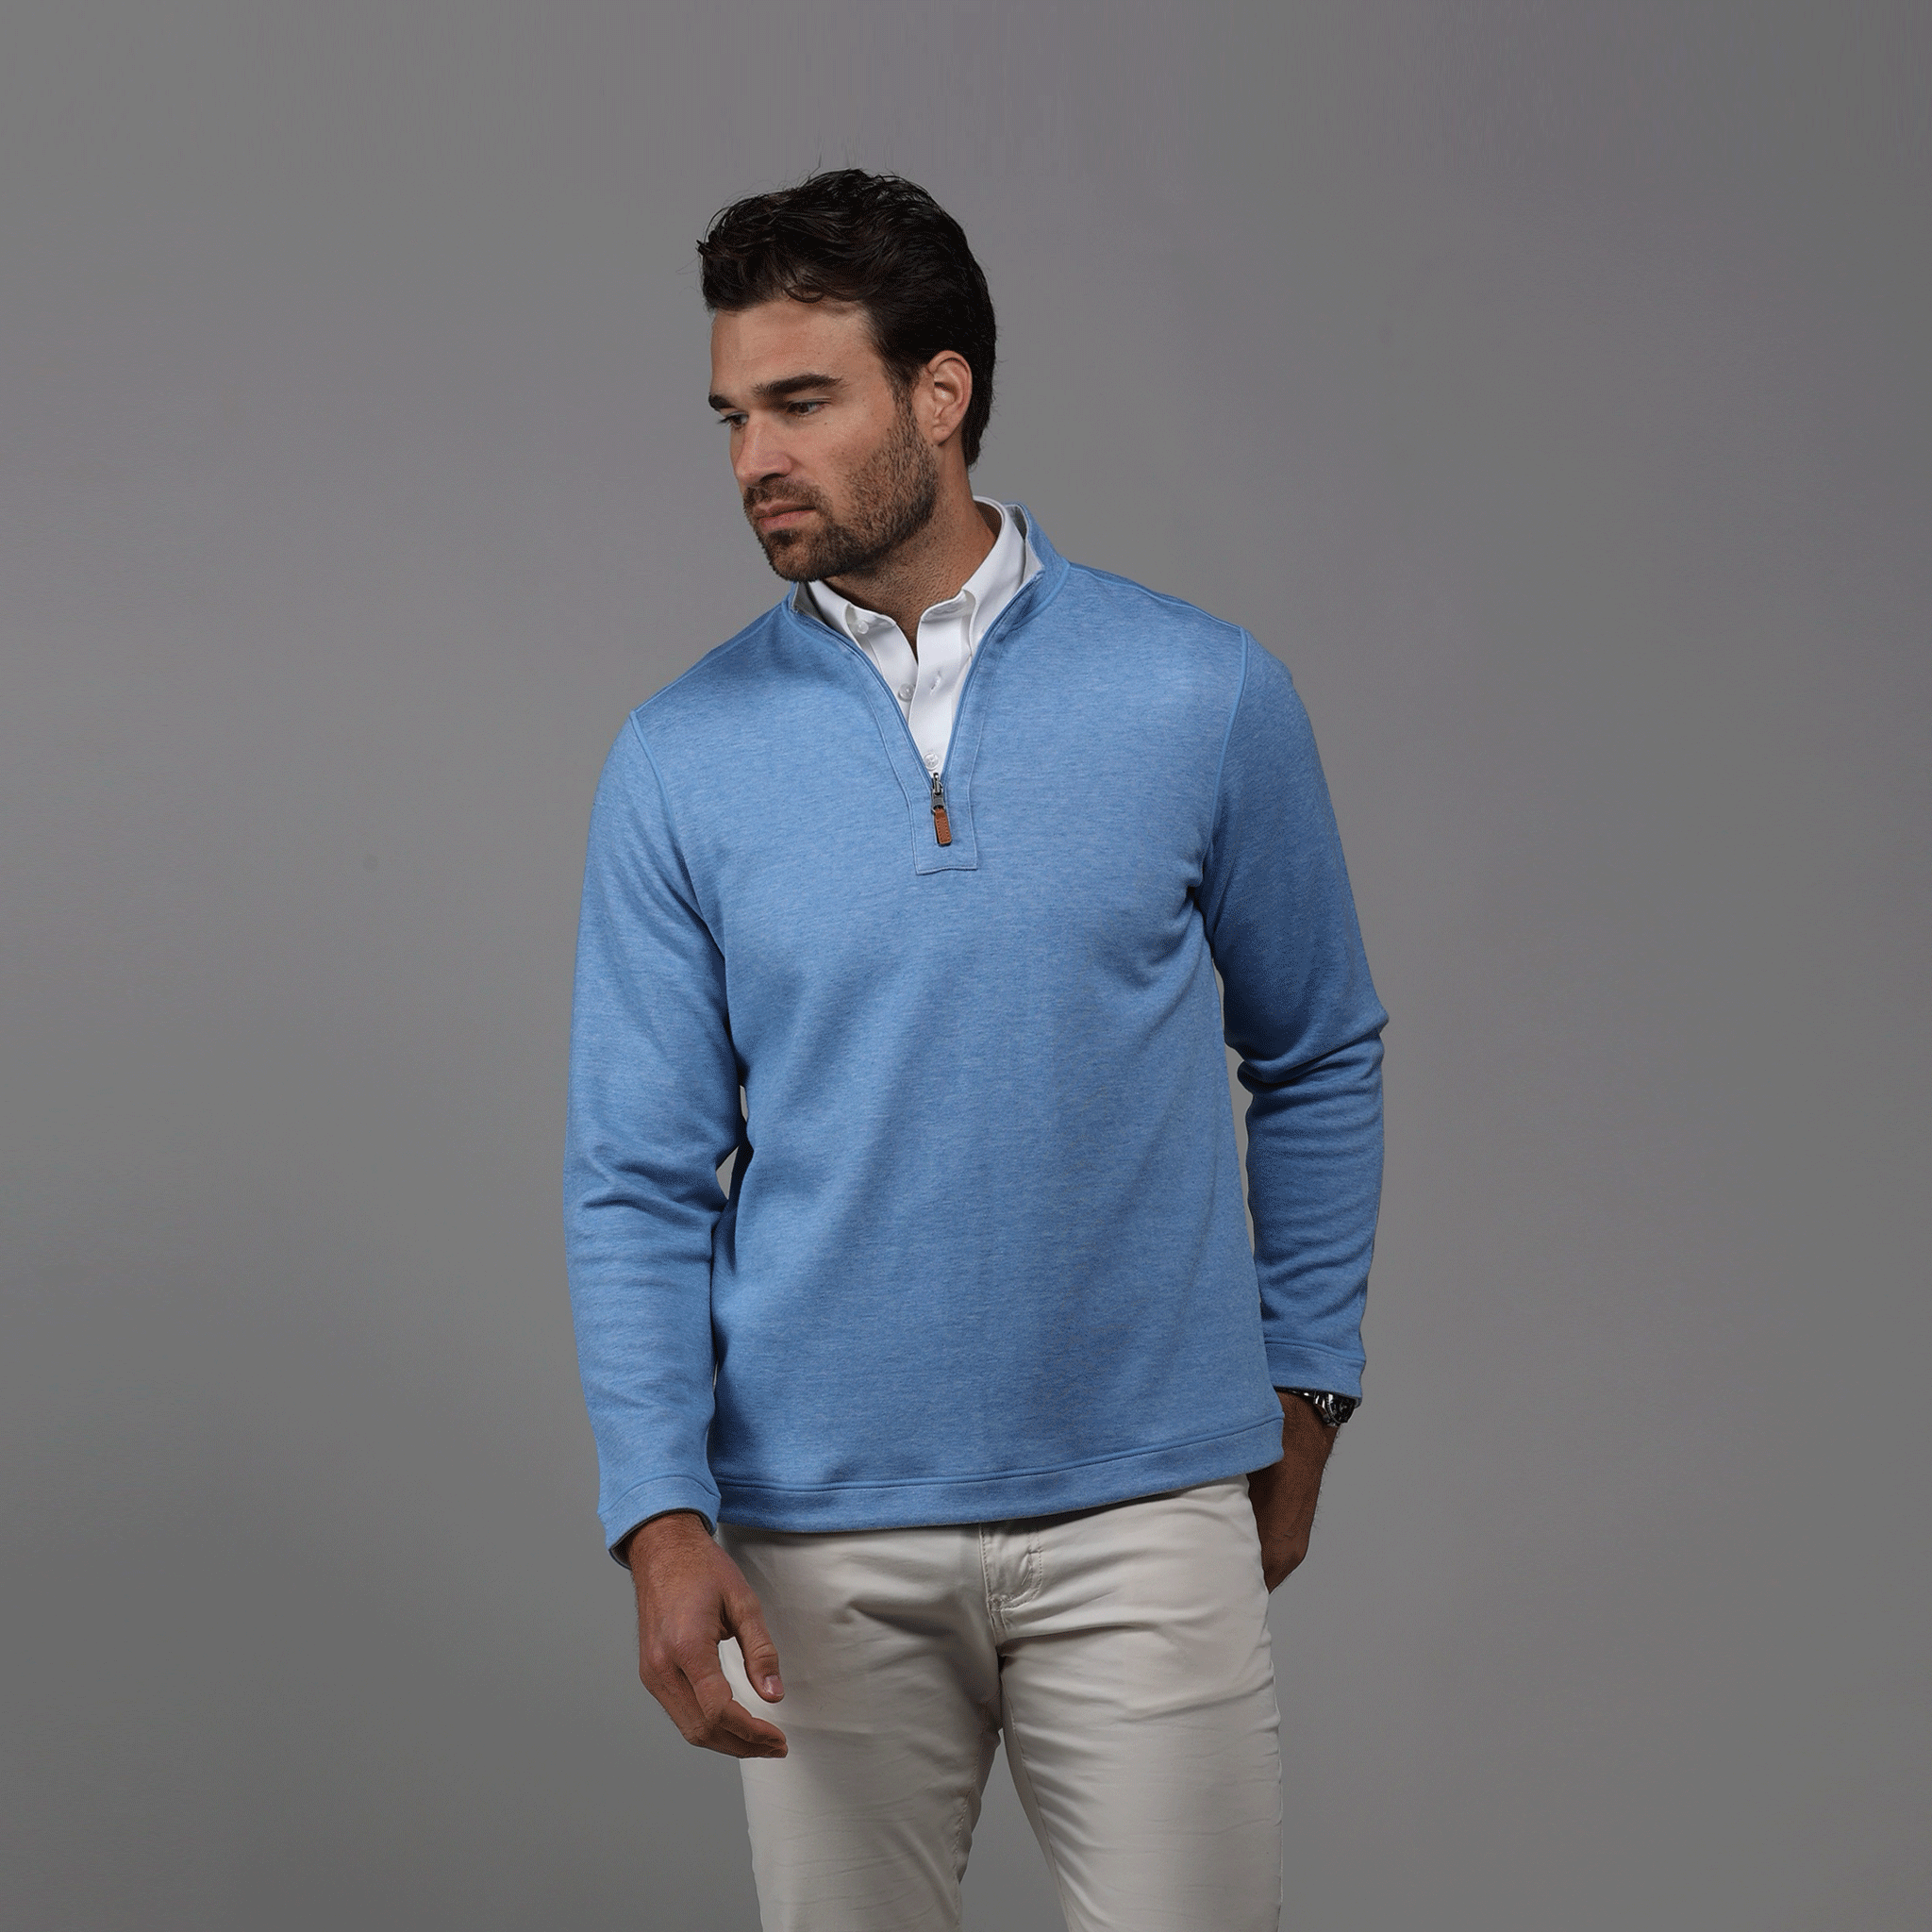 Pullov Zen Quarter Sky Grey and Blend Light Reversible Blue – Cotton Zip Collars &